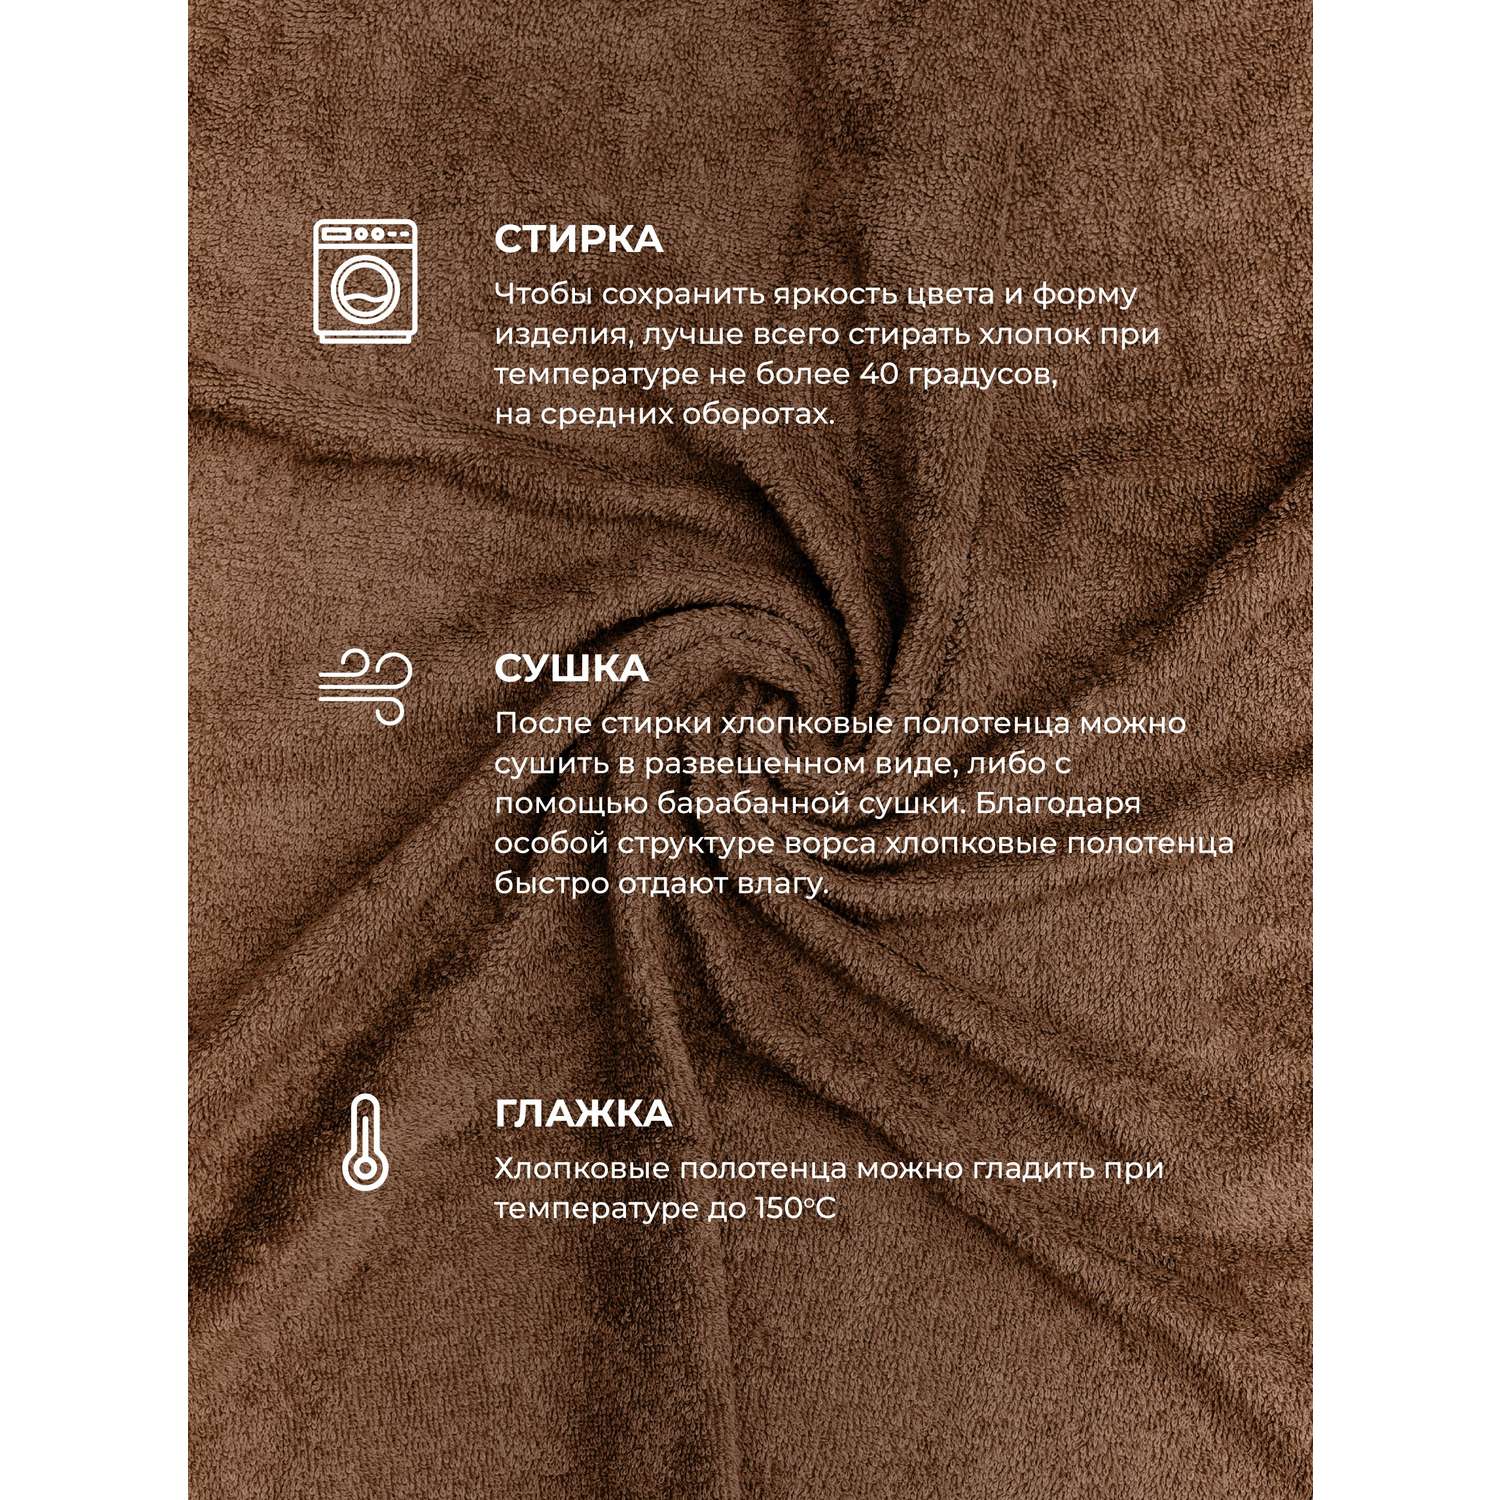 Набор махровых полотенец Unifico Nature шоколад набор из 3 шт.:30х60-1. 50х80-1. 70х130-1 - фото 6